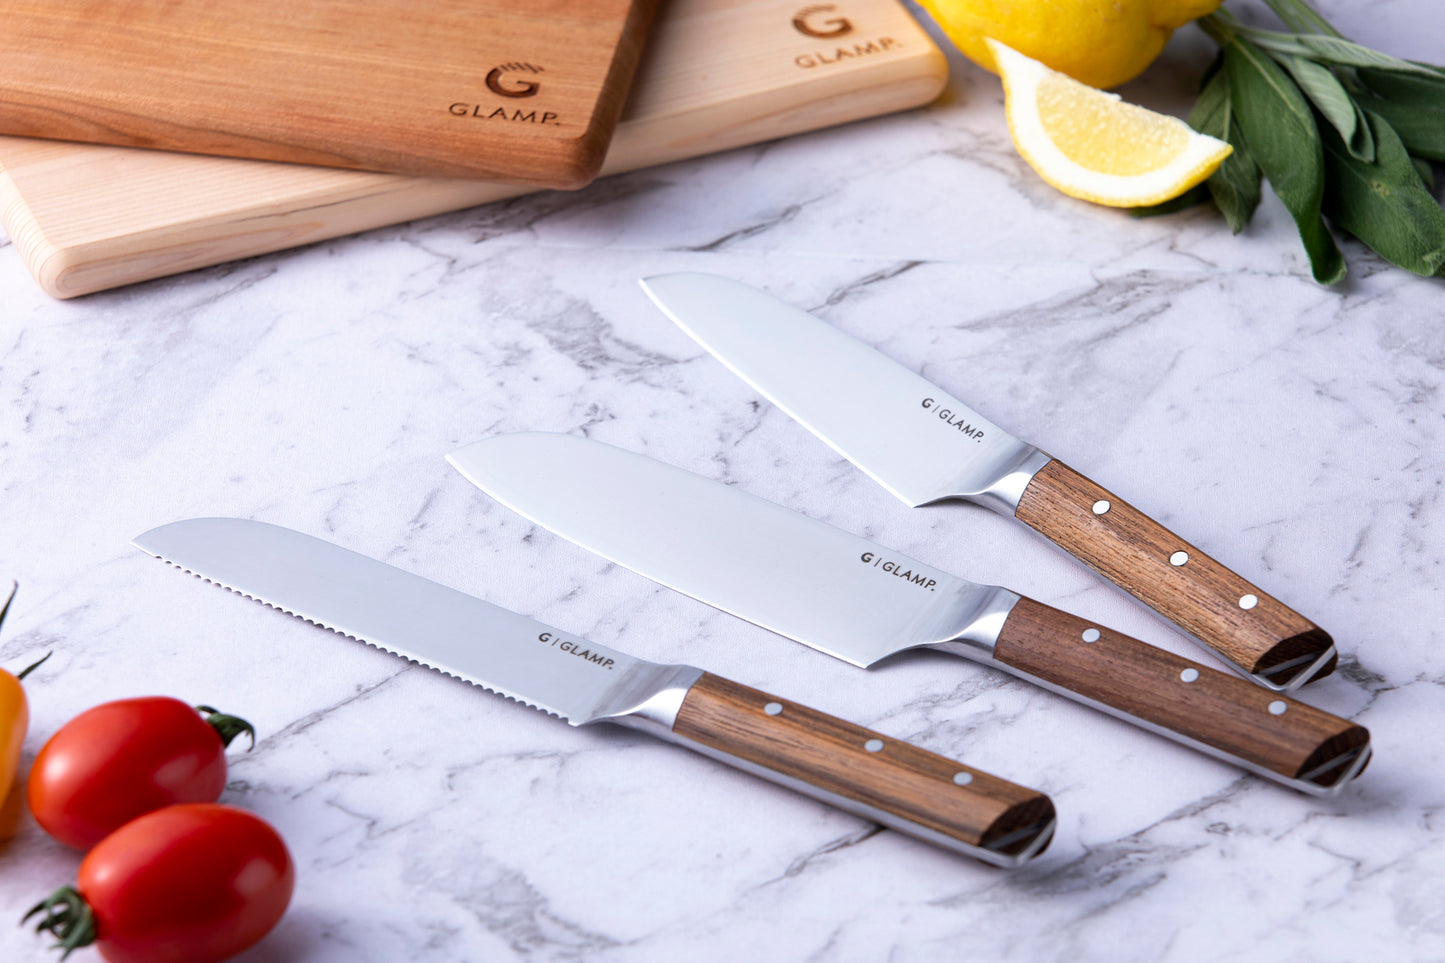 Set of 3 compact knives (Santoku knife + Petty knife + Bread knife) | GLAMP.